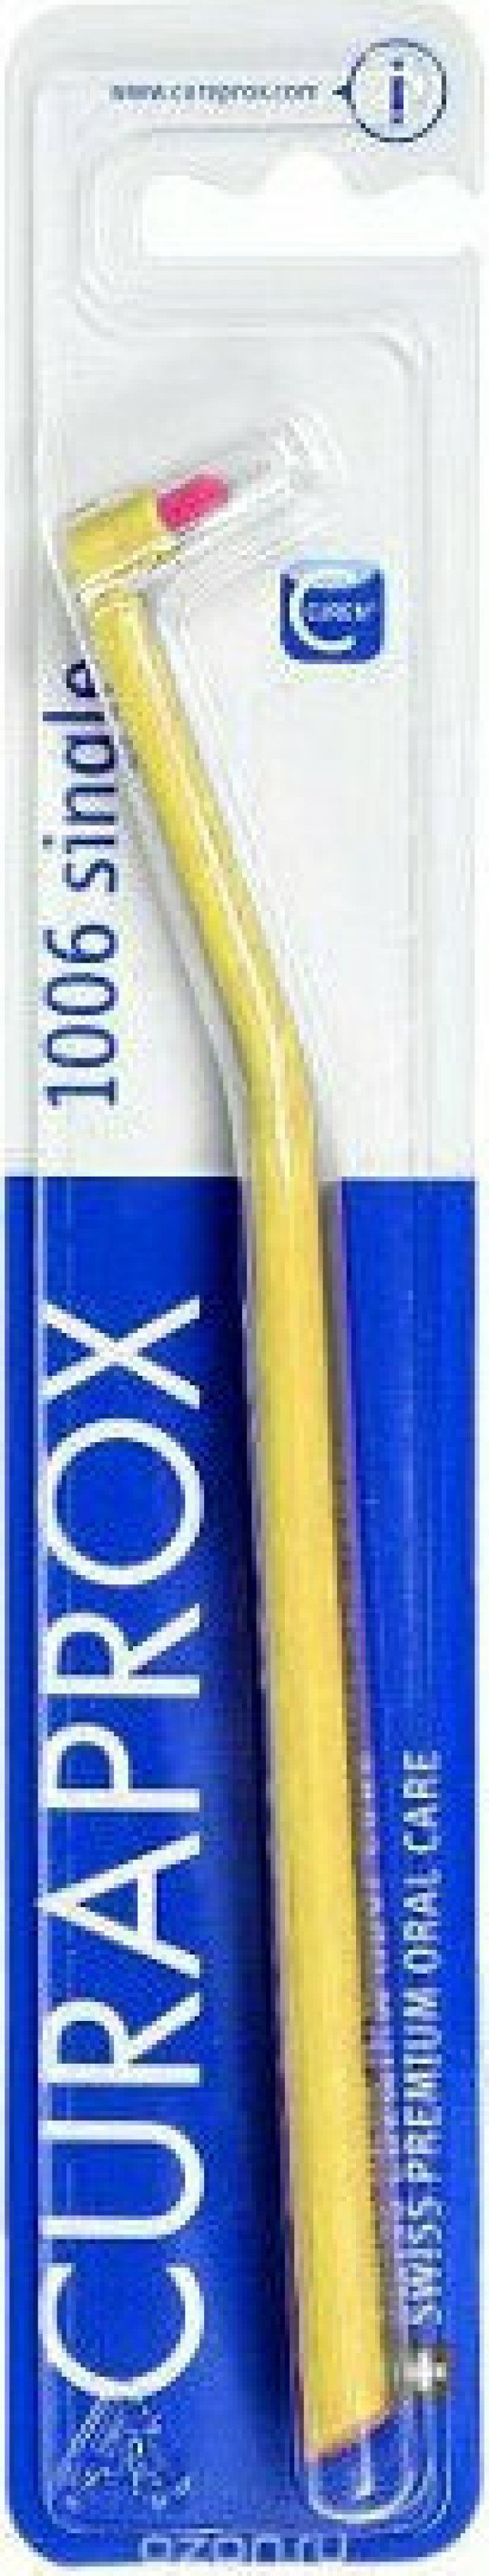 Curaprox CS 1006 Single Ειδική Οδοντόβουρτσα για Σιδεράκια και Εμφυτεύματα Χρώμα:Κίτρινο - Φούξια Ίνες 1 Τεμάχιο